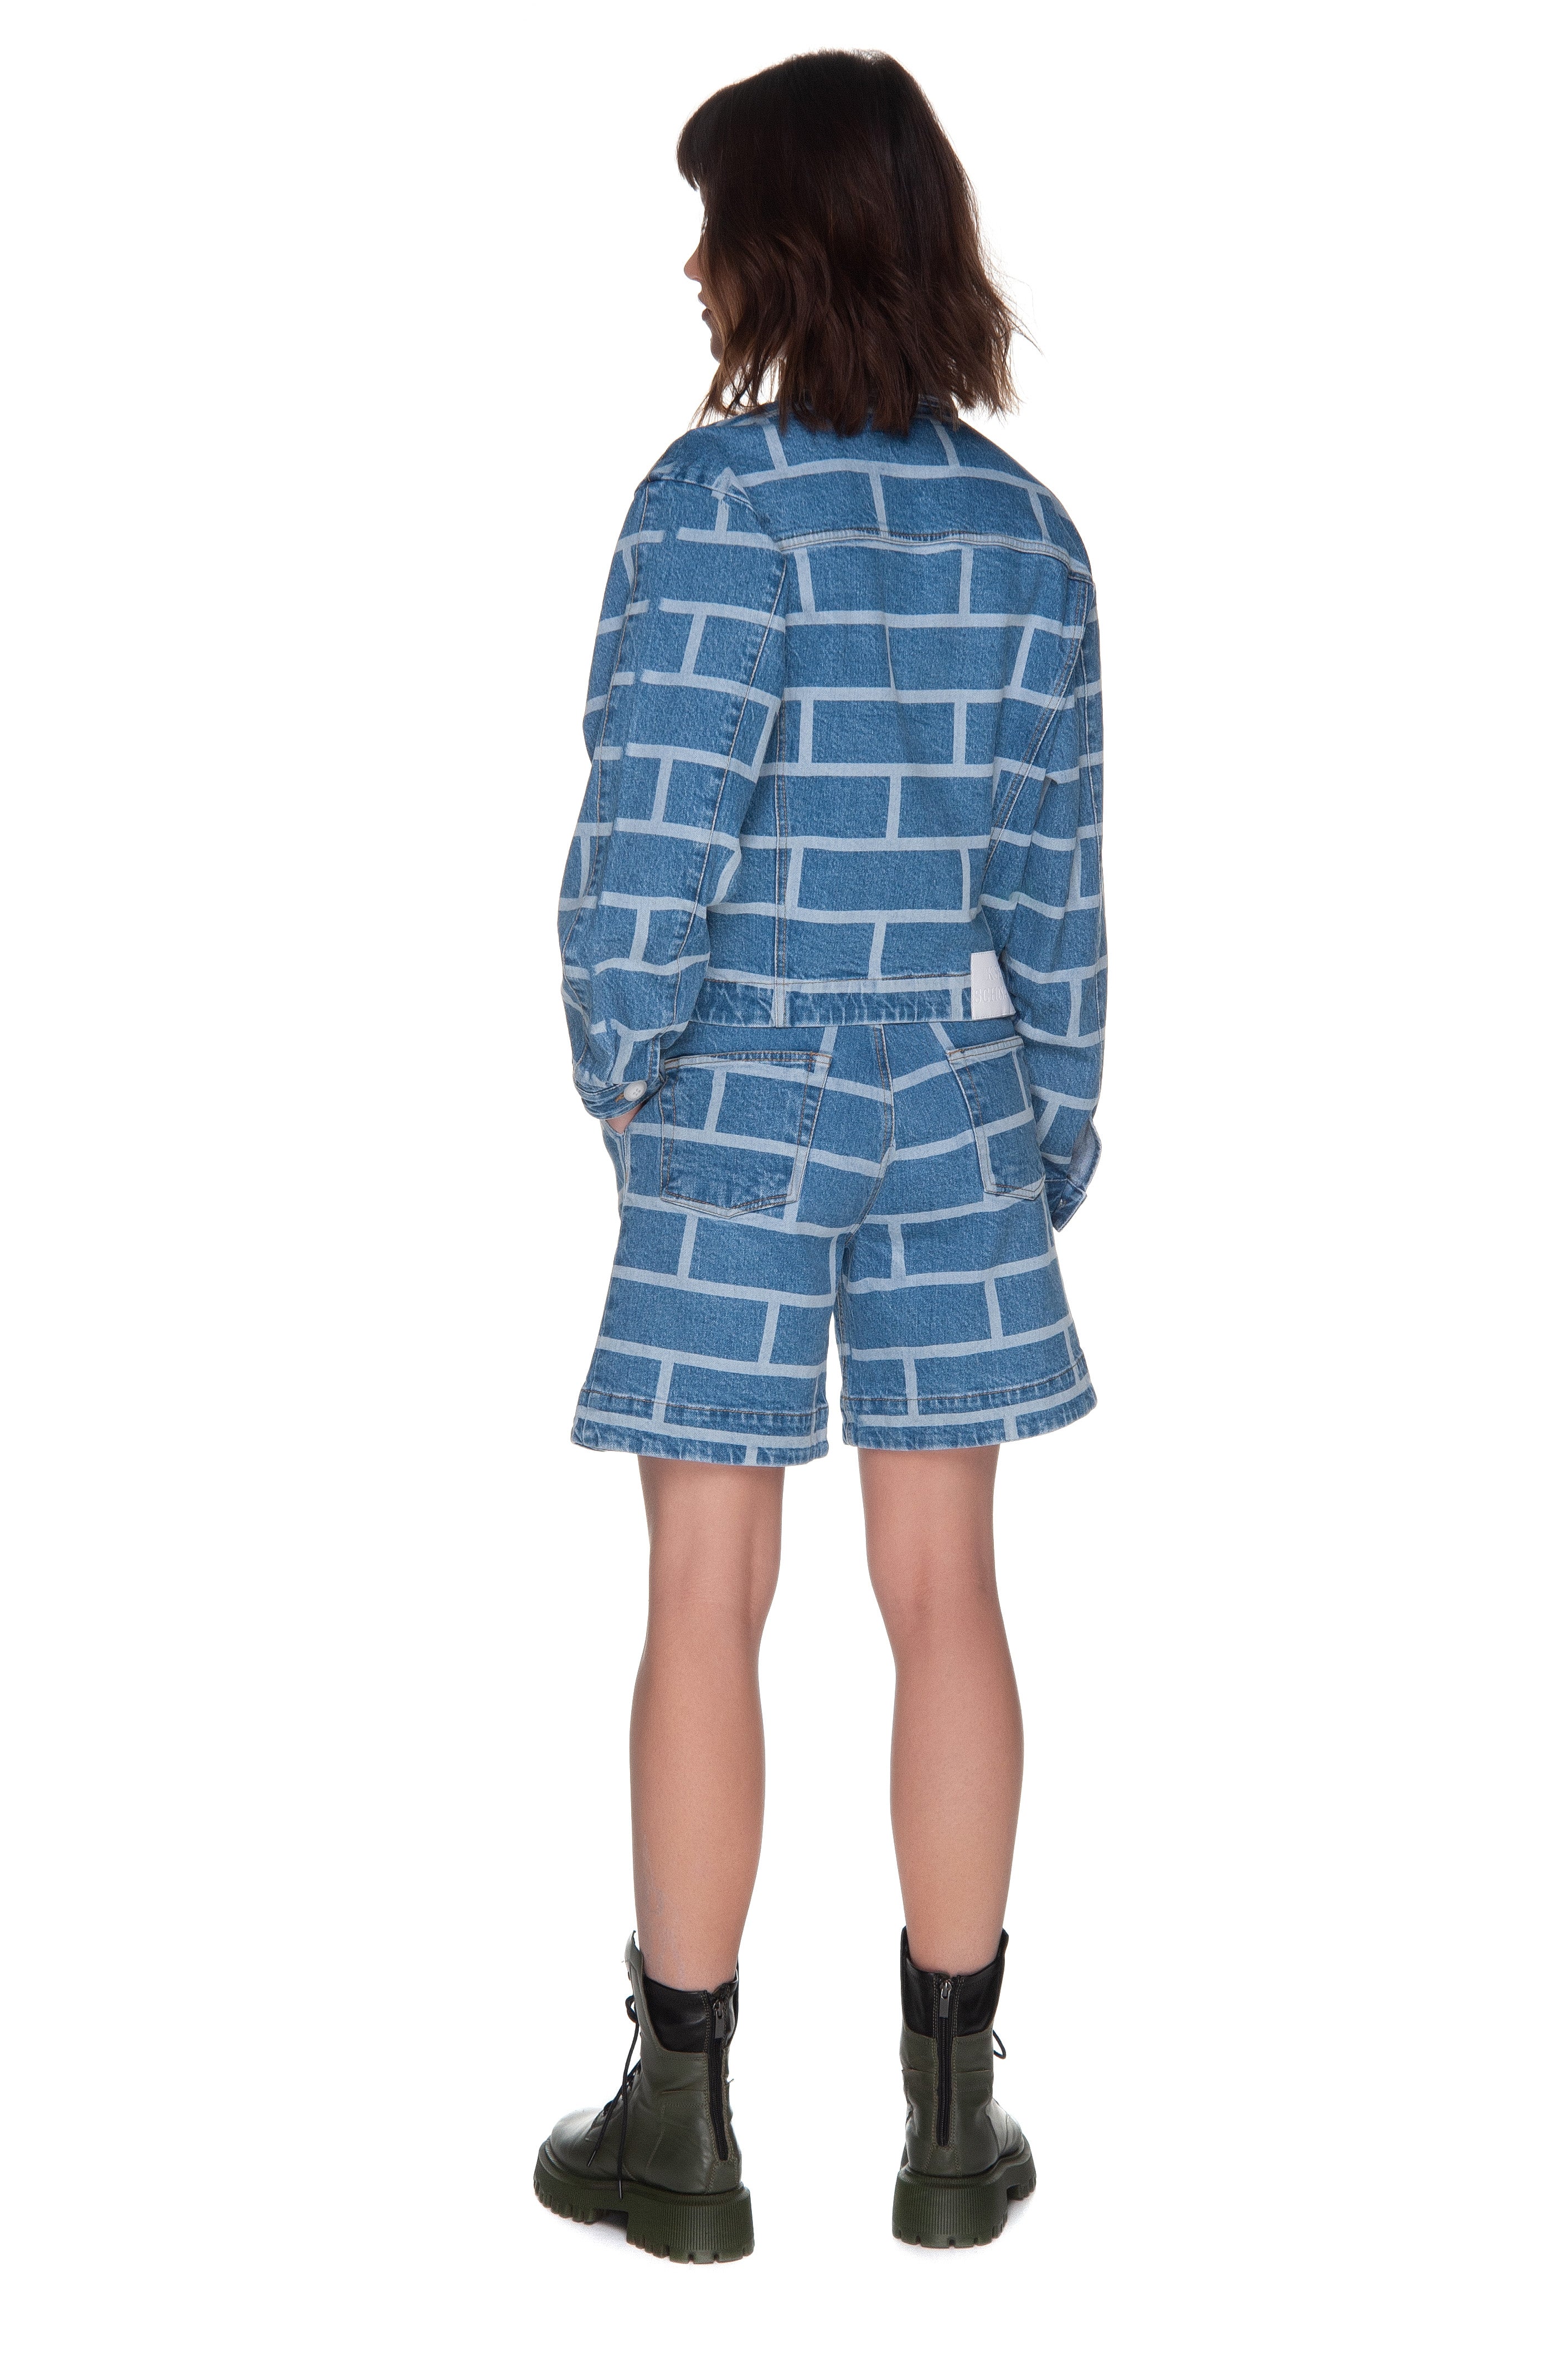 Denim Jacket with Brick Print image